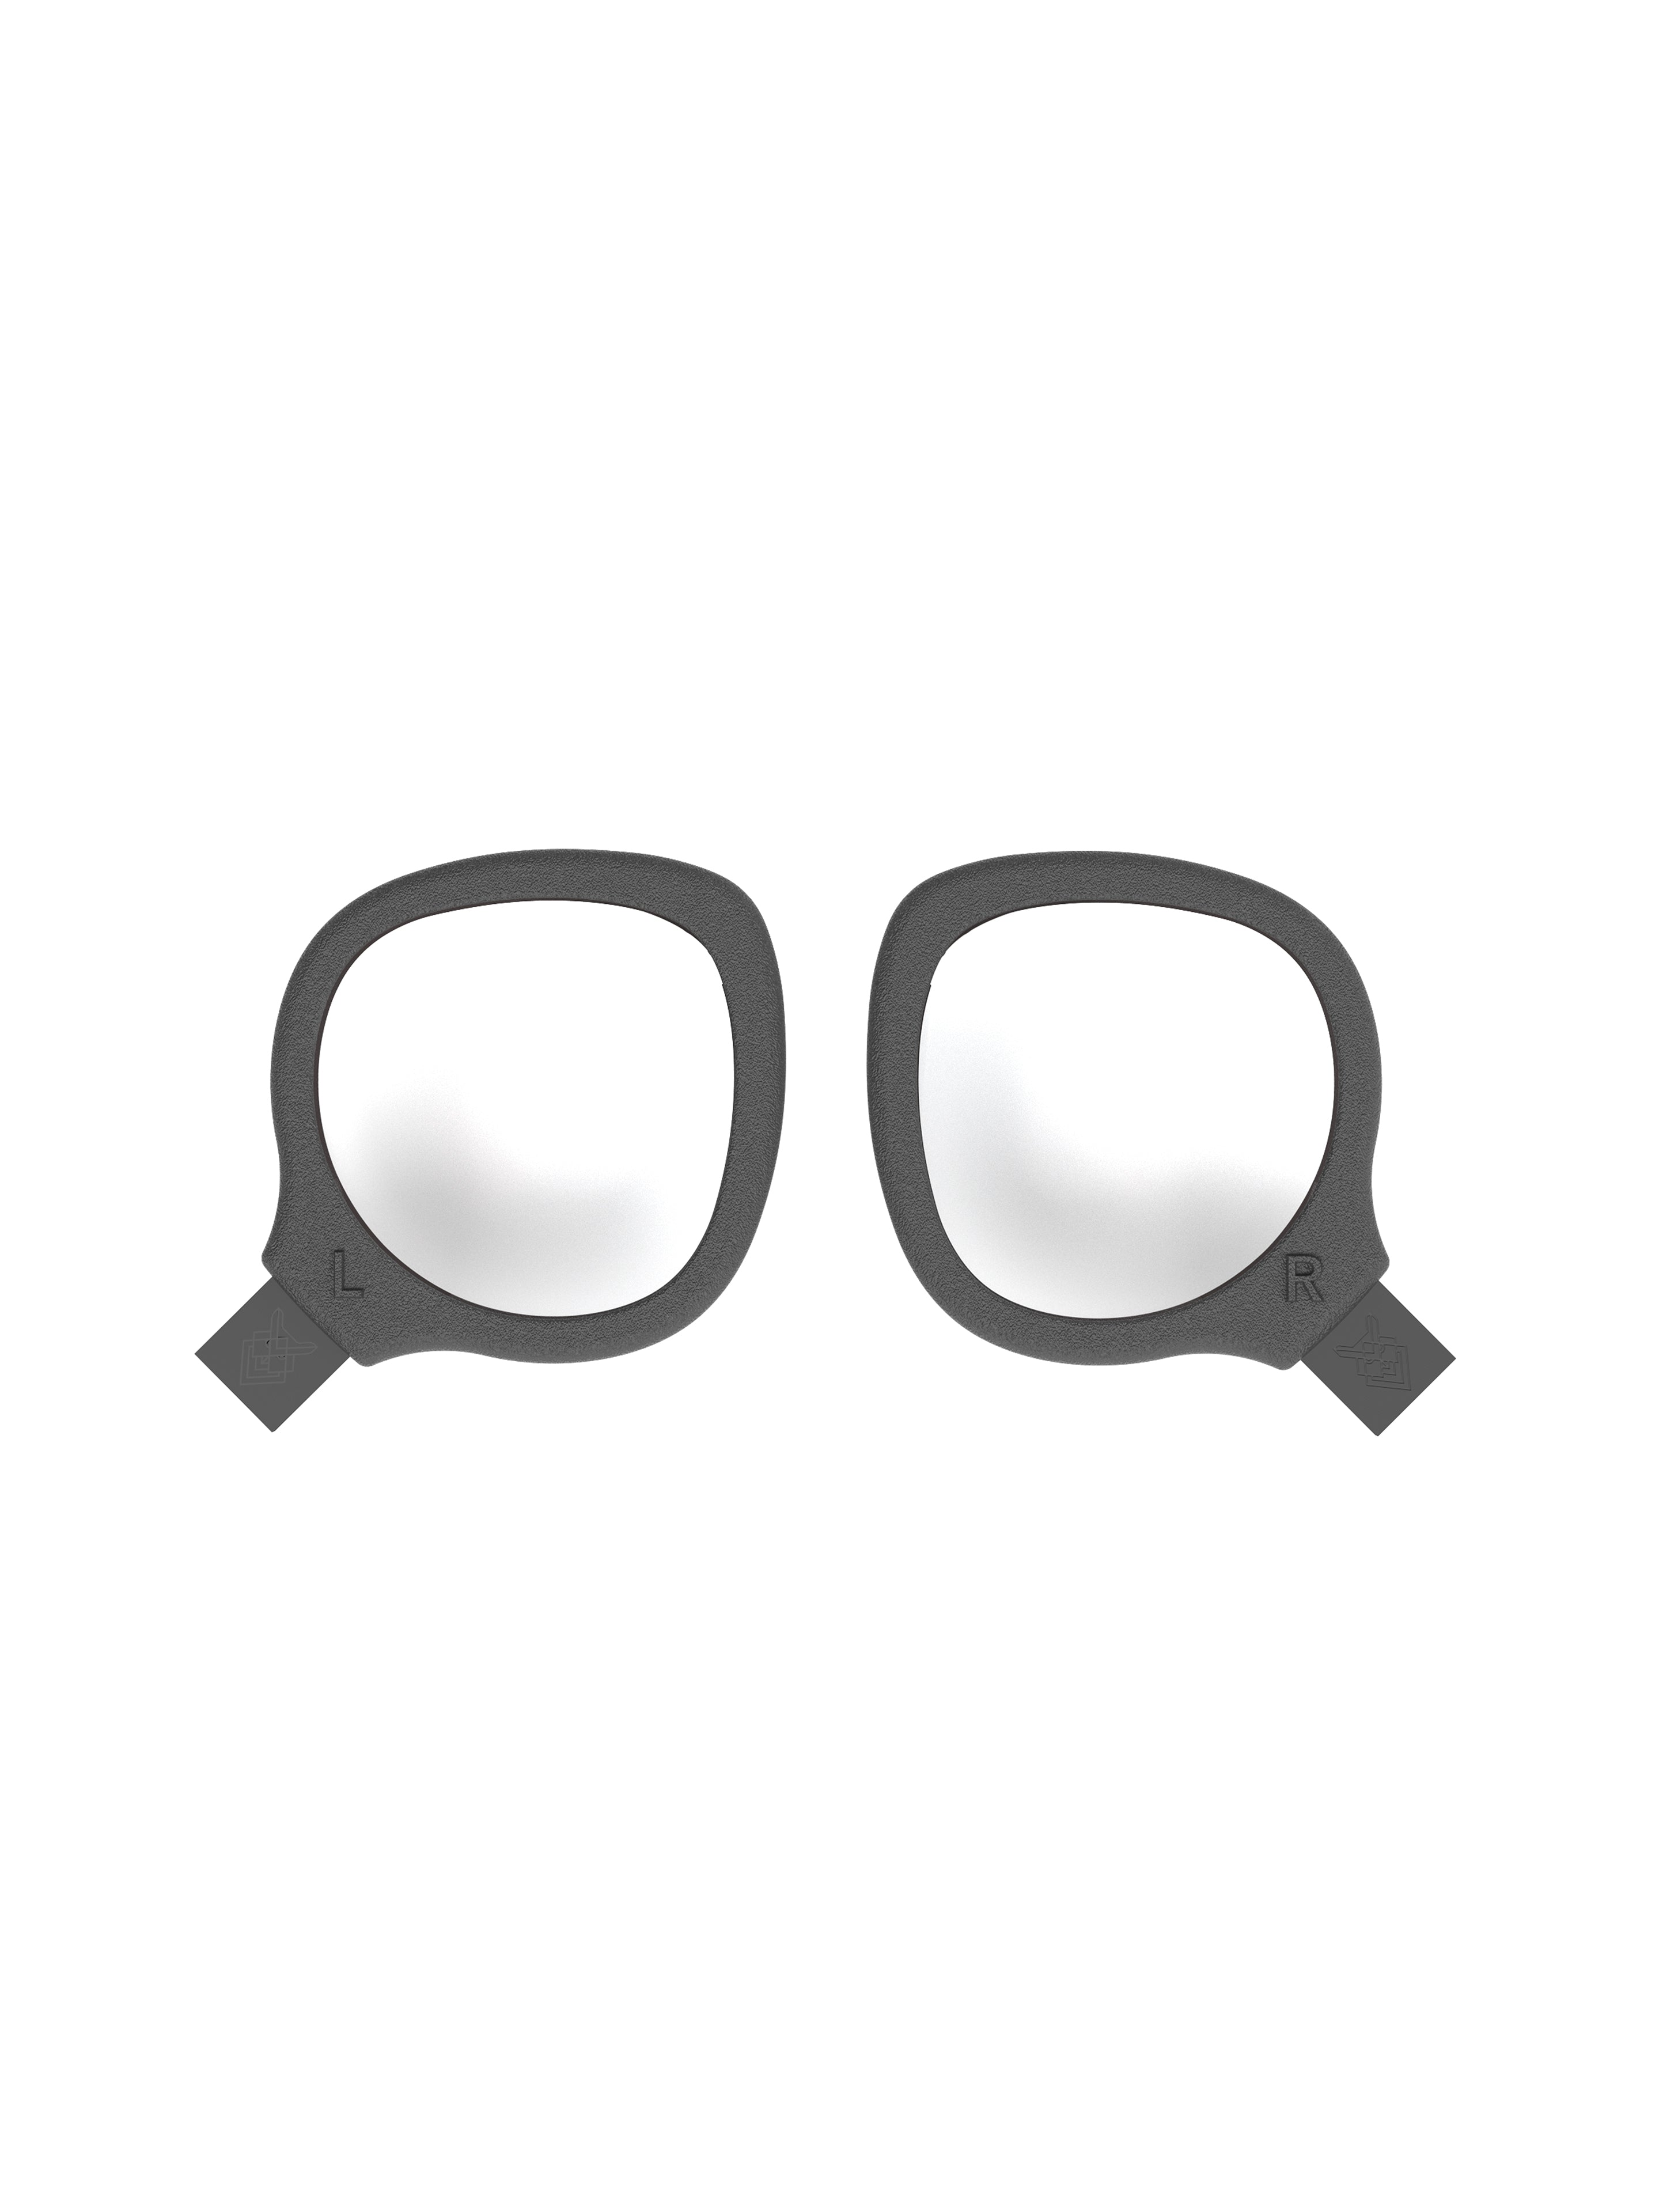 Extra Reloptix Oculus Quest 2 Prescription Lens Inserts